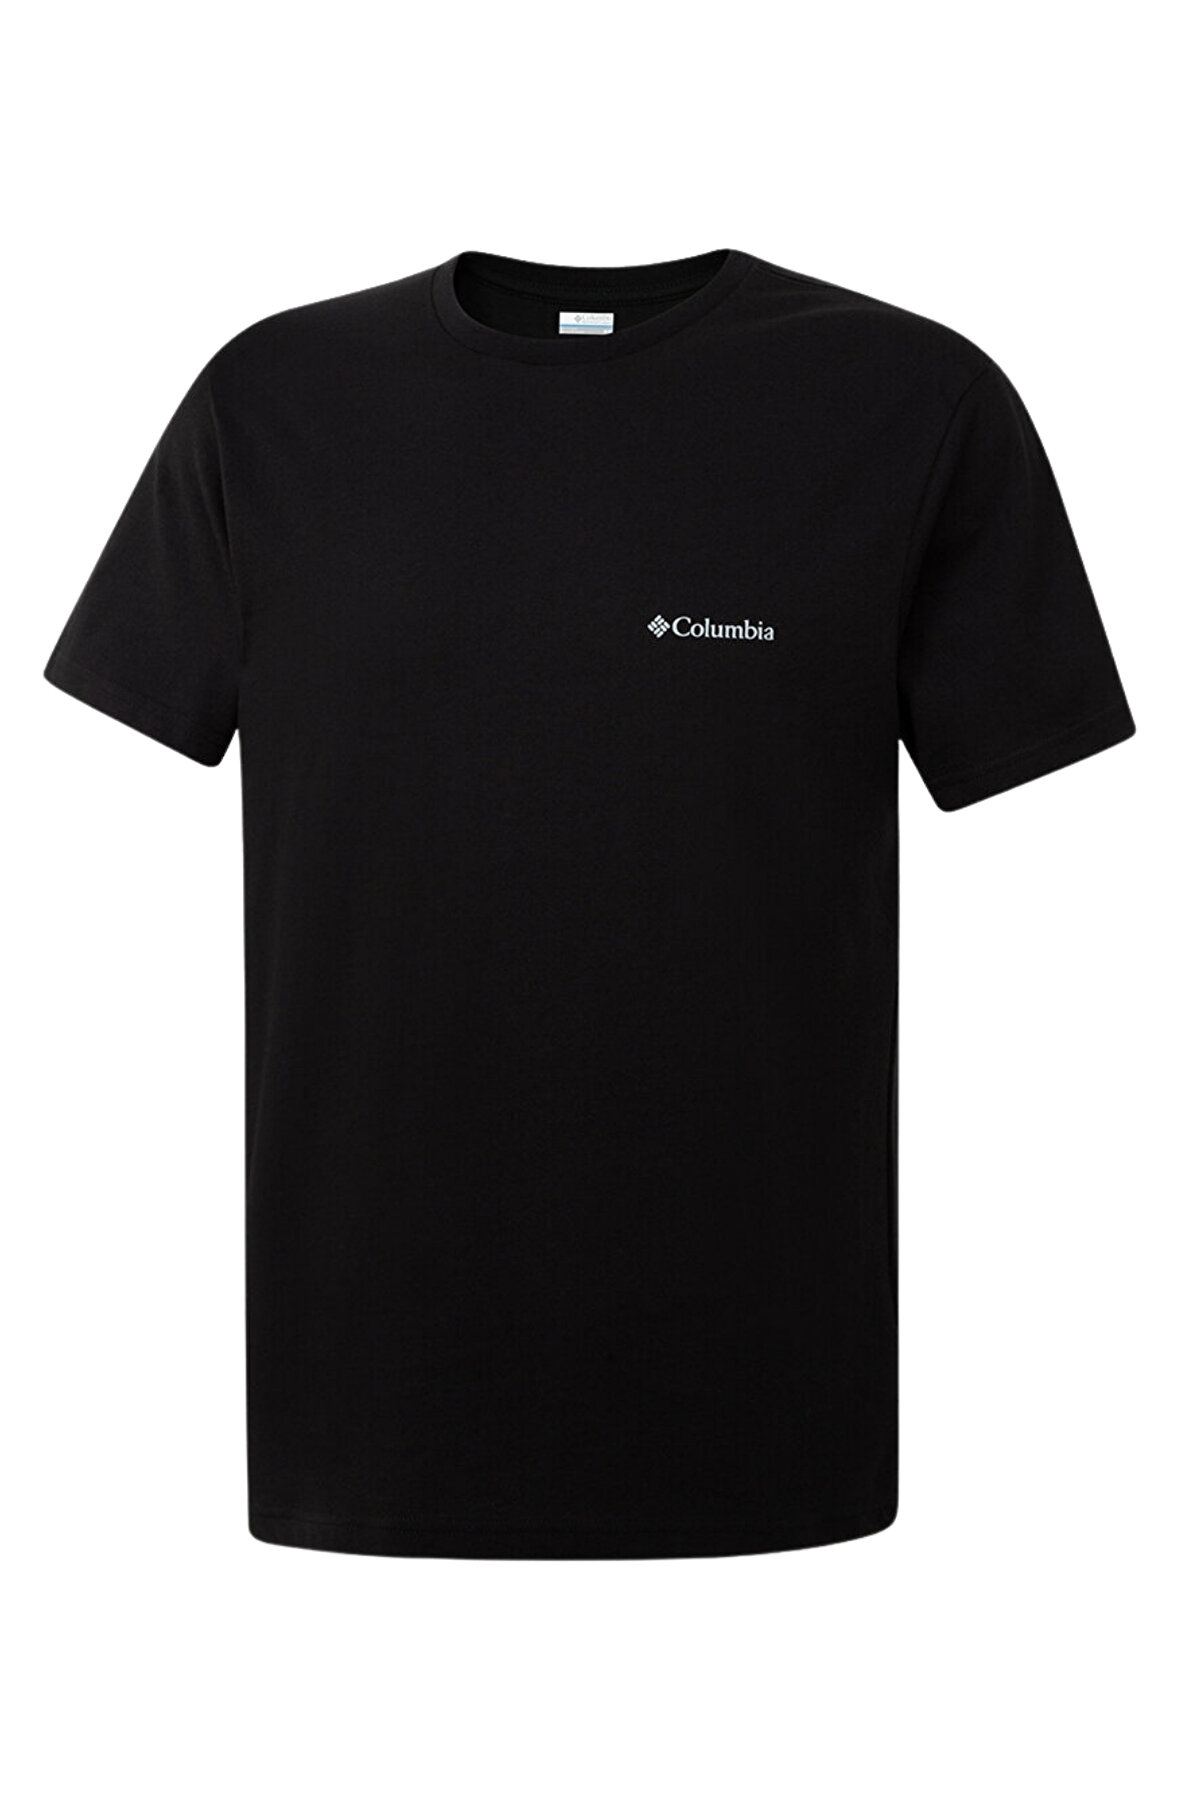 Columbia Erkek Siyah T-shirt 9110010010-00010